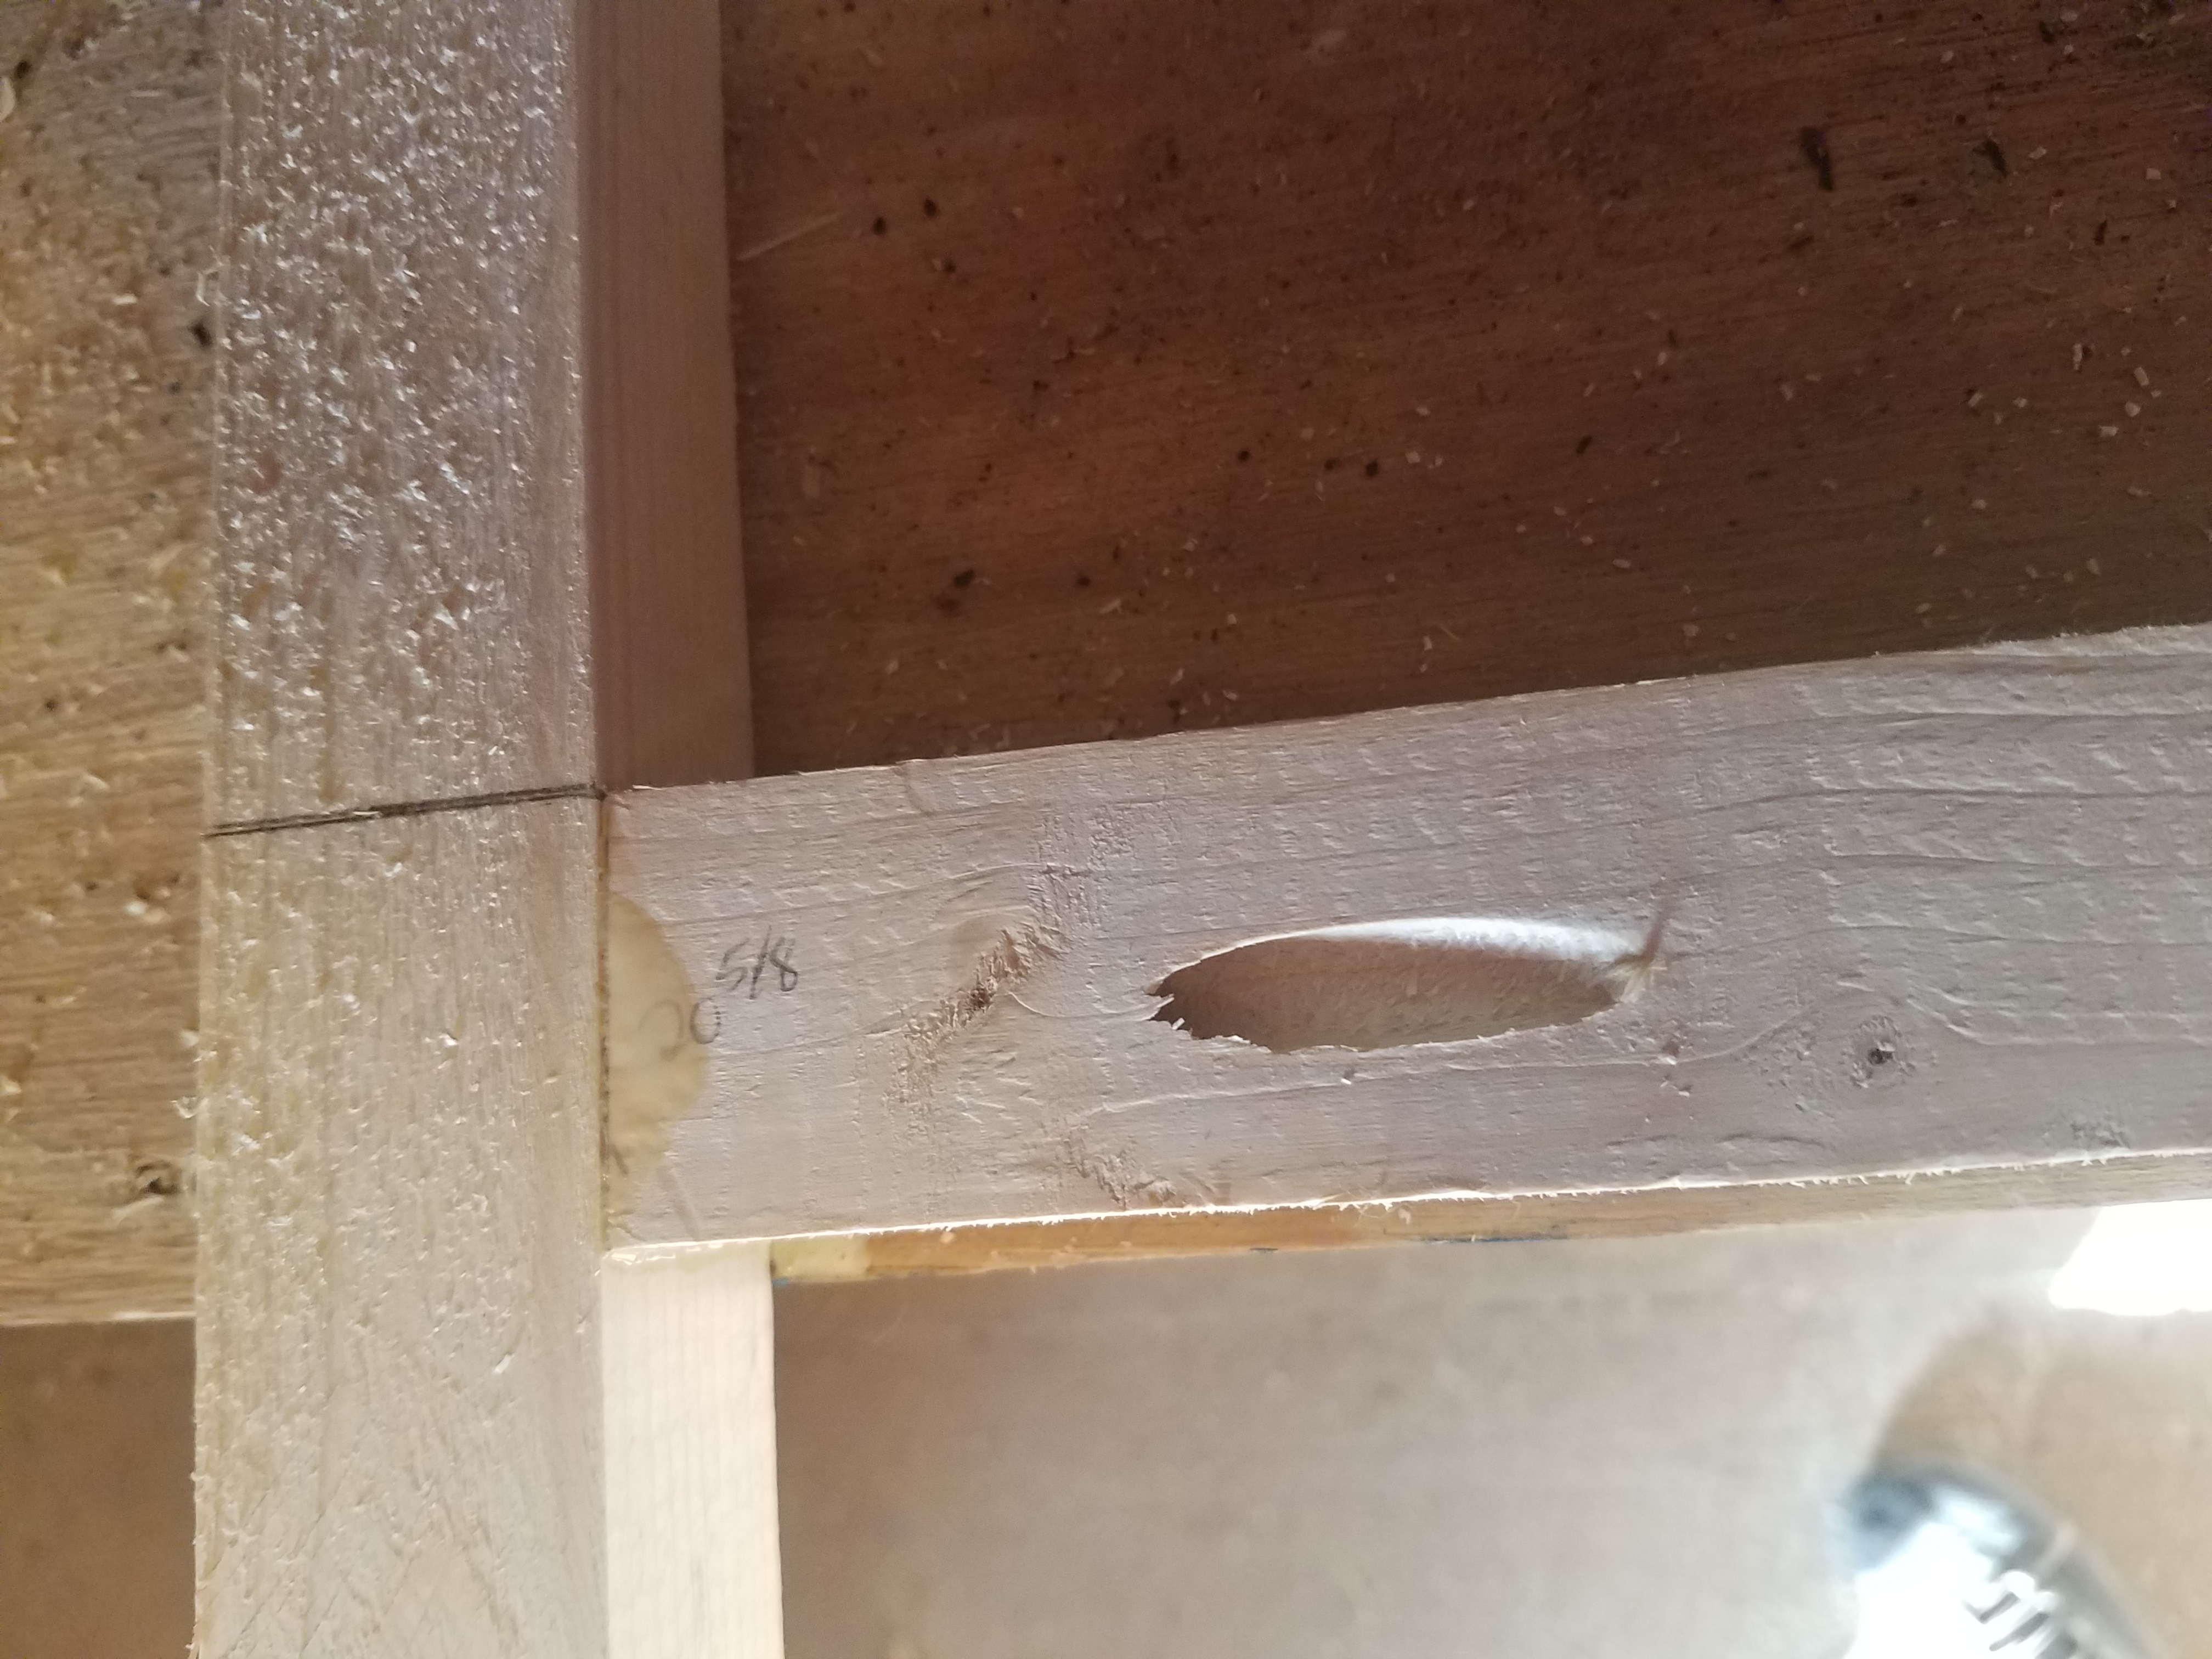 A wood joint showing a pocket hole kreg jig and wood glue